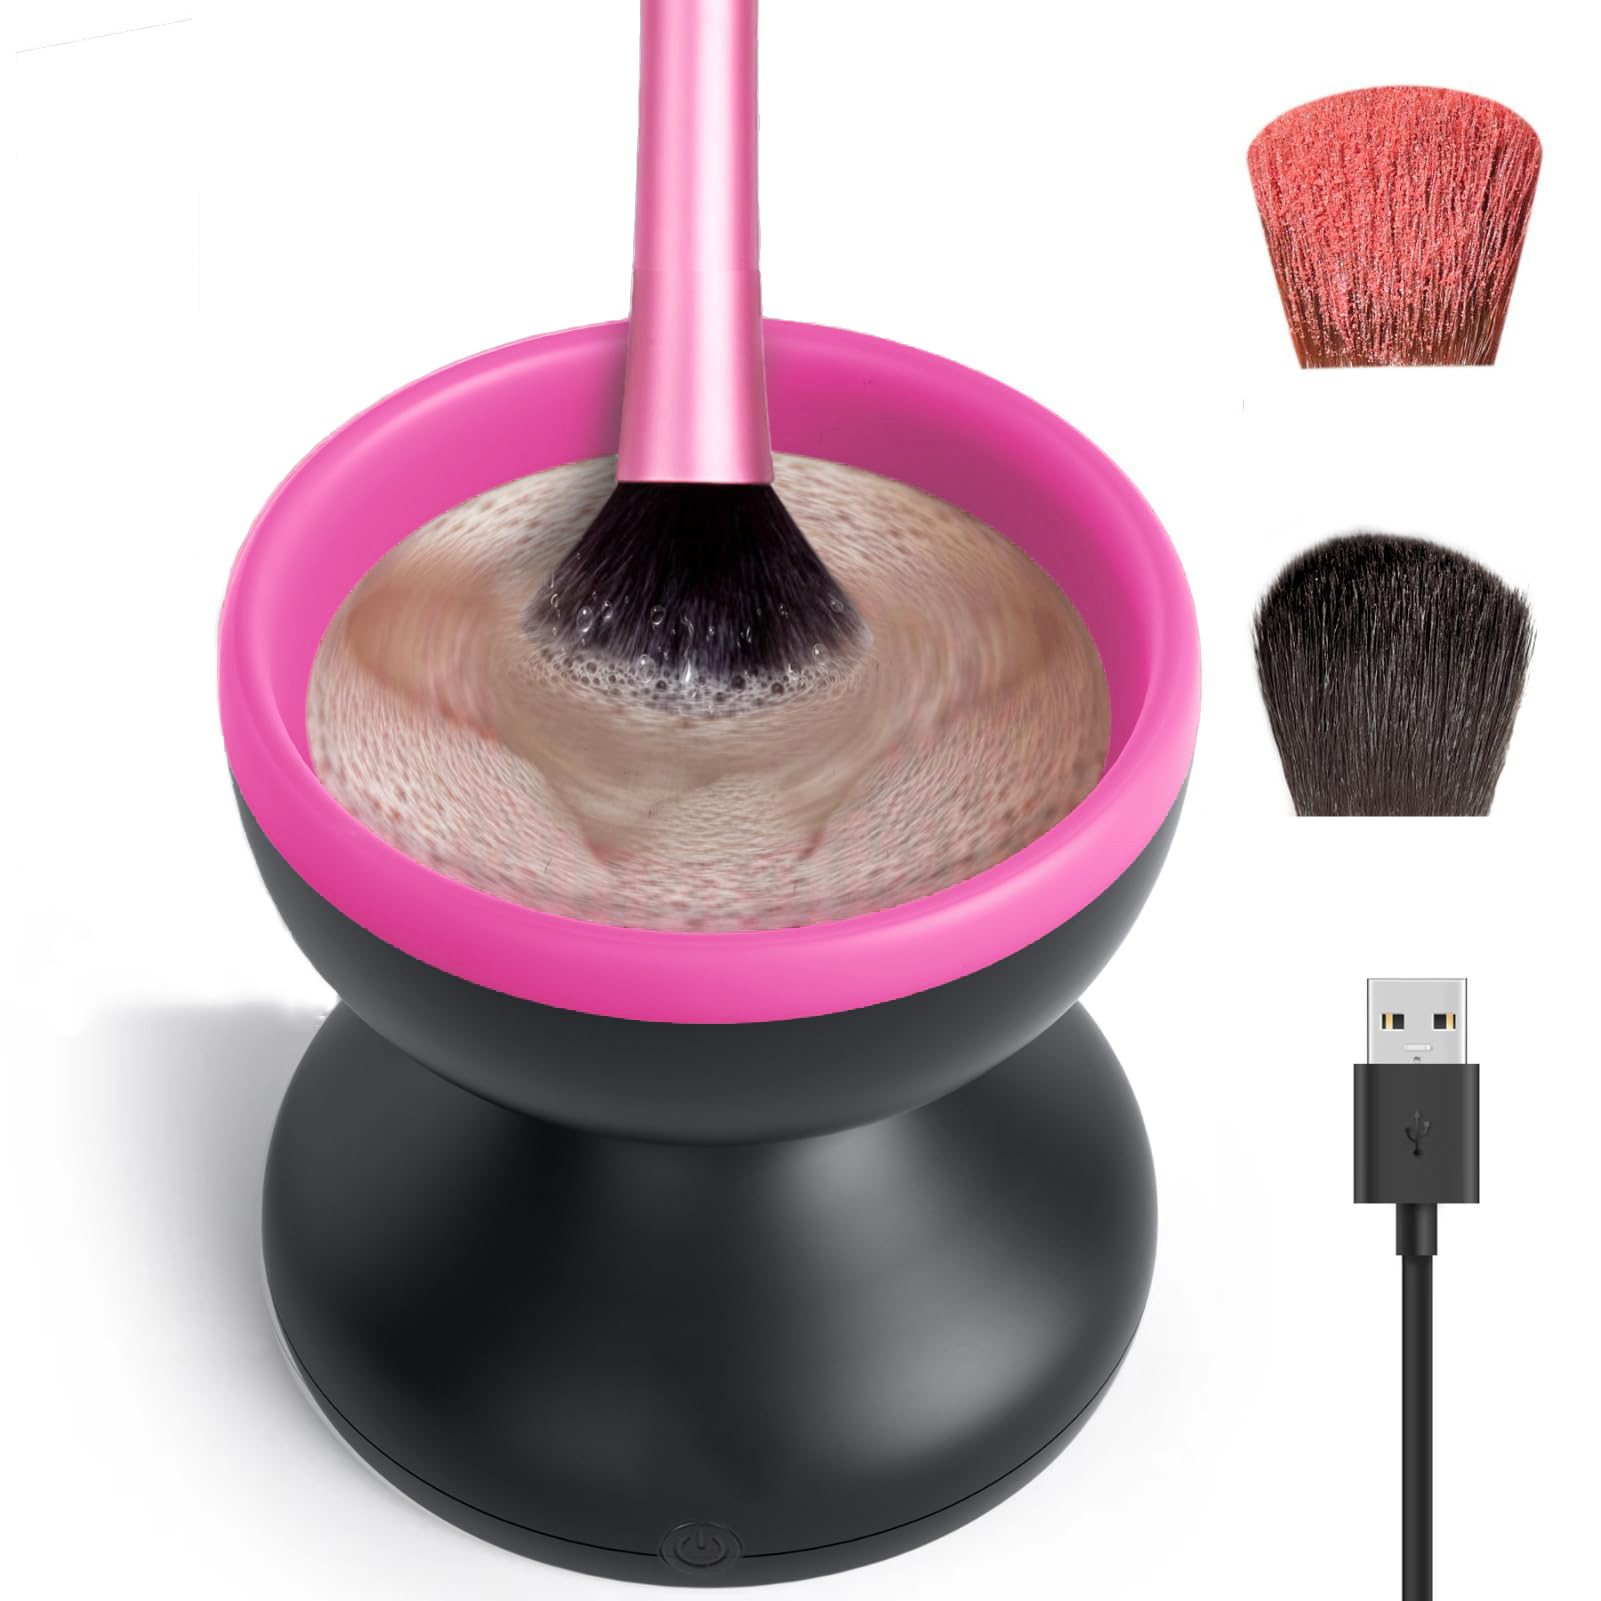 Makeup Brush Cleaner Machine-Electric Makeup Brush Cleaner Tool For All  Size Beauty Makeup Brushes Set Foundation Concealer Contour Eyeshadow